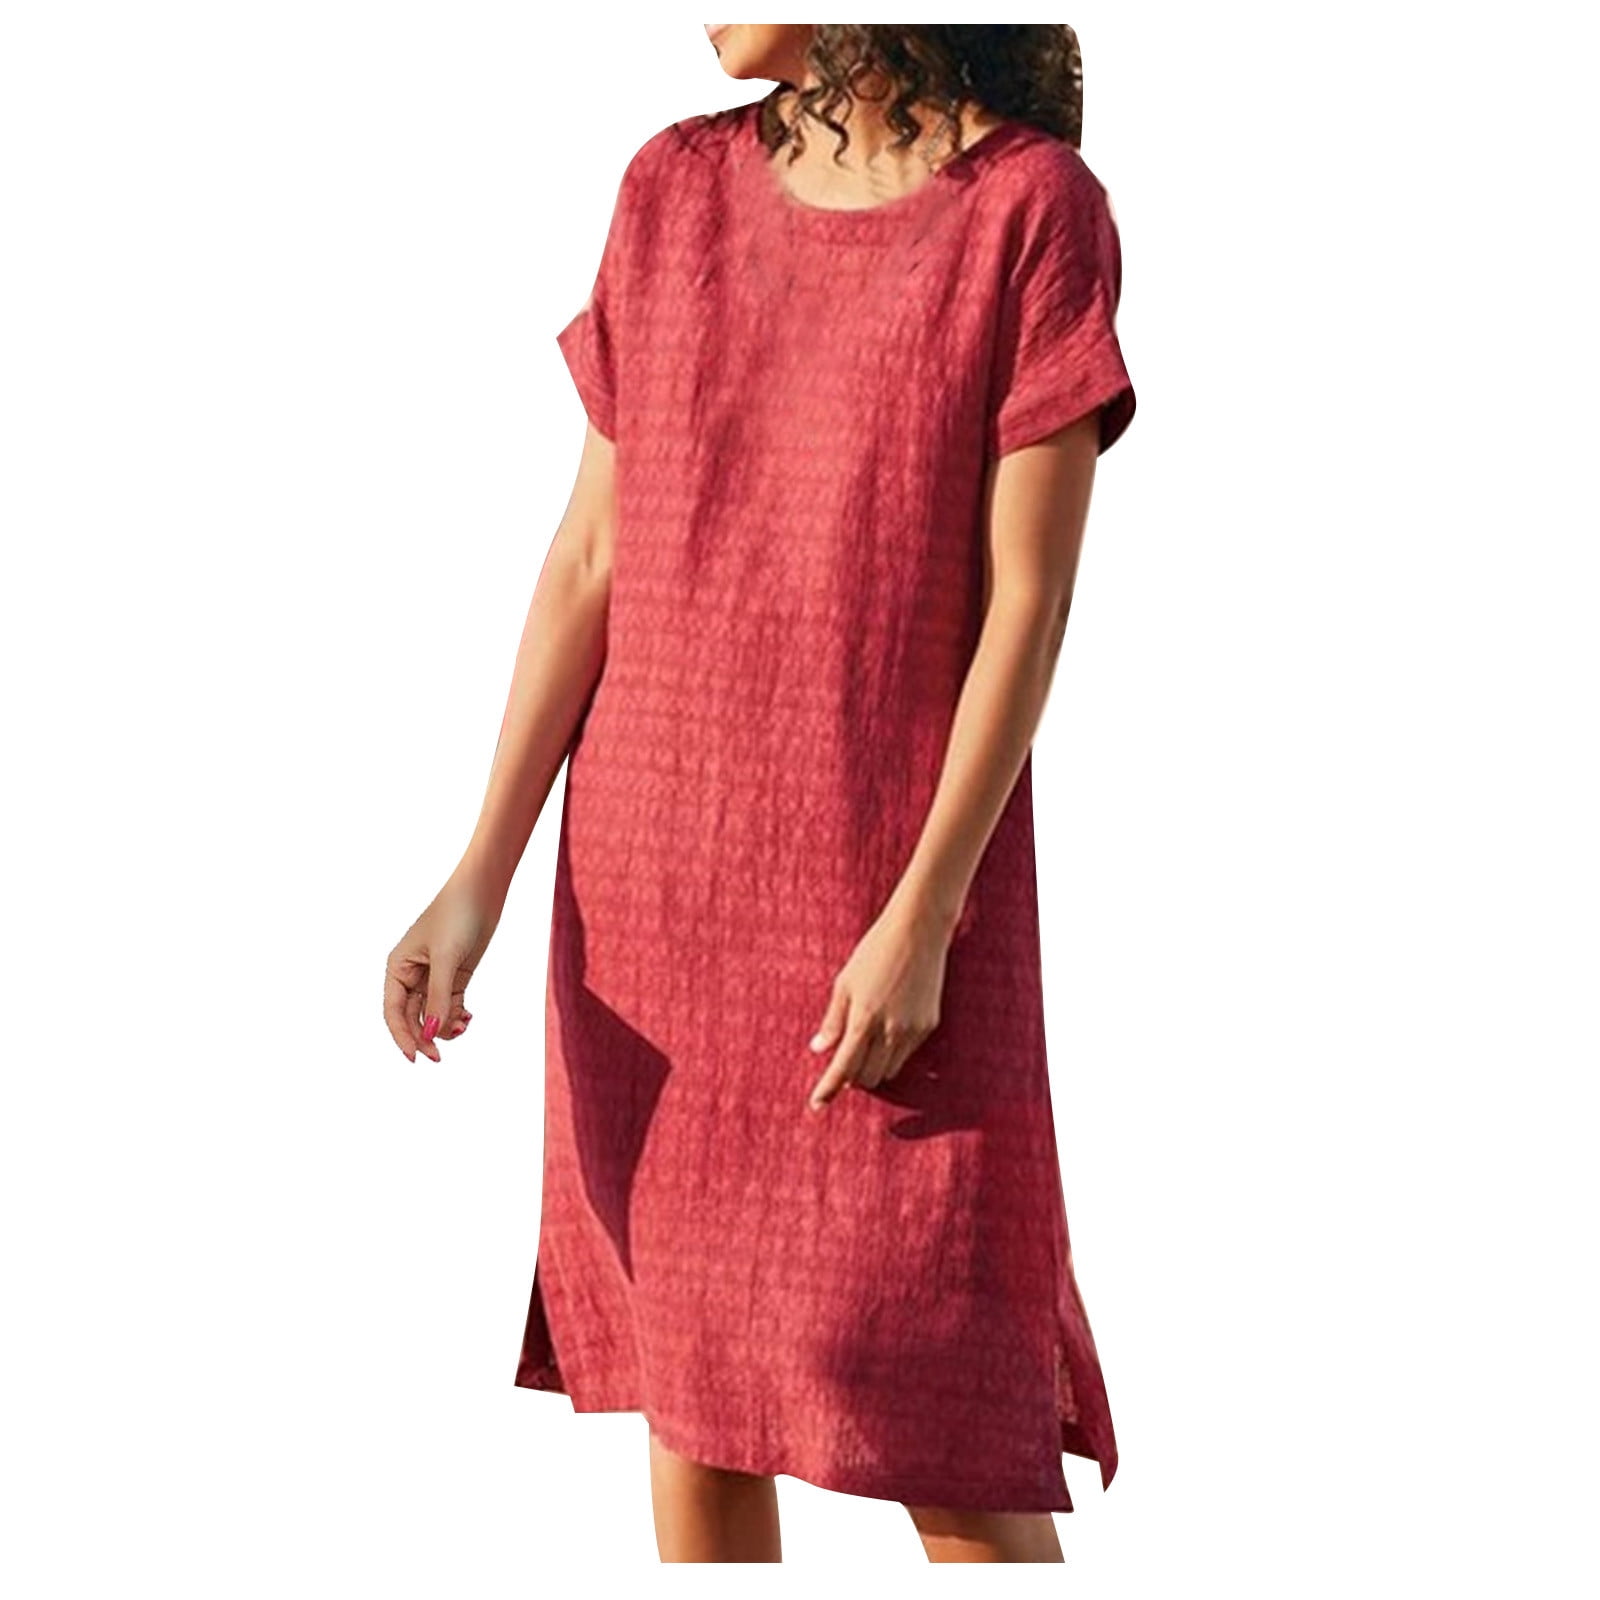 Tarmeek Women's Summer Plus Size Dress Casual Sleeveless Cotton Sun ...